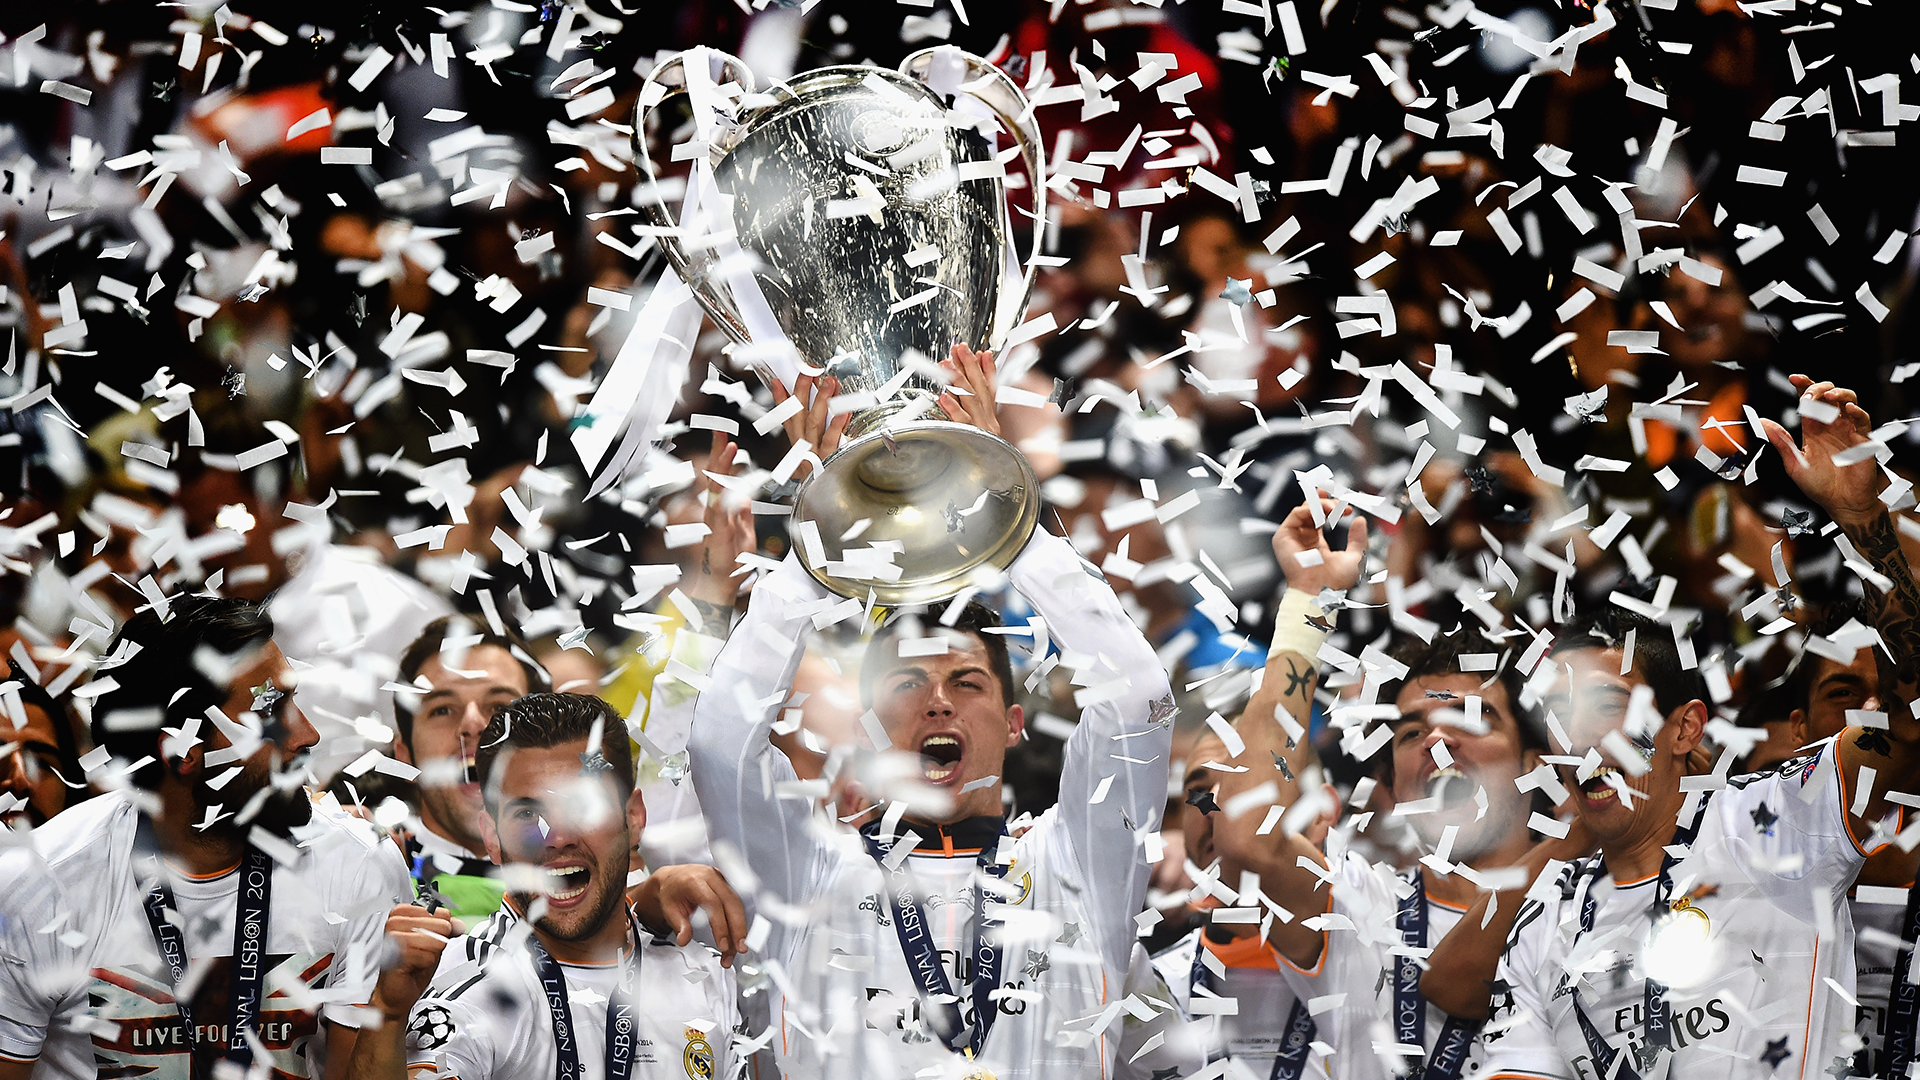 Real Madrid 2014 Champions League winners